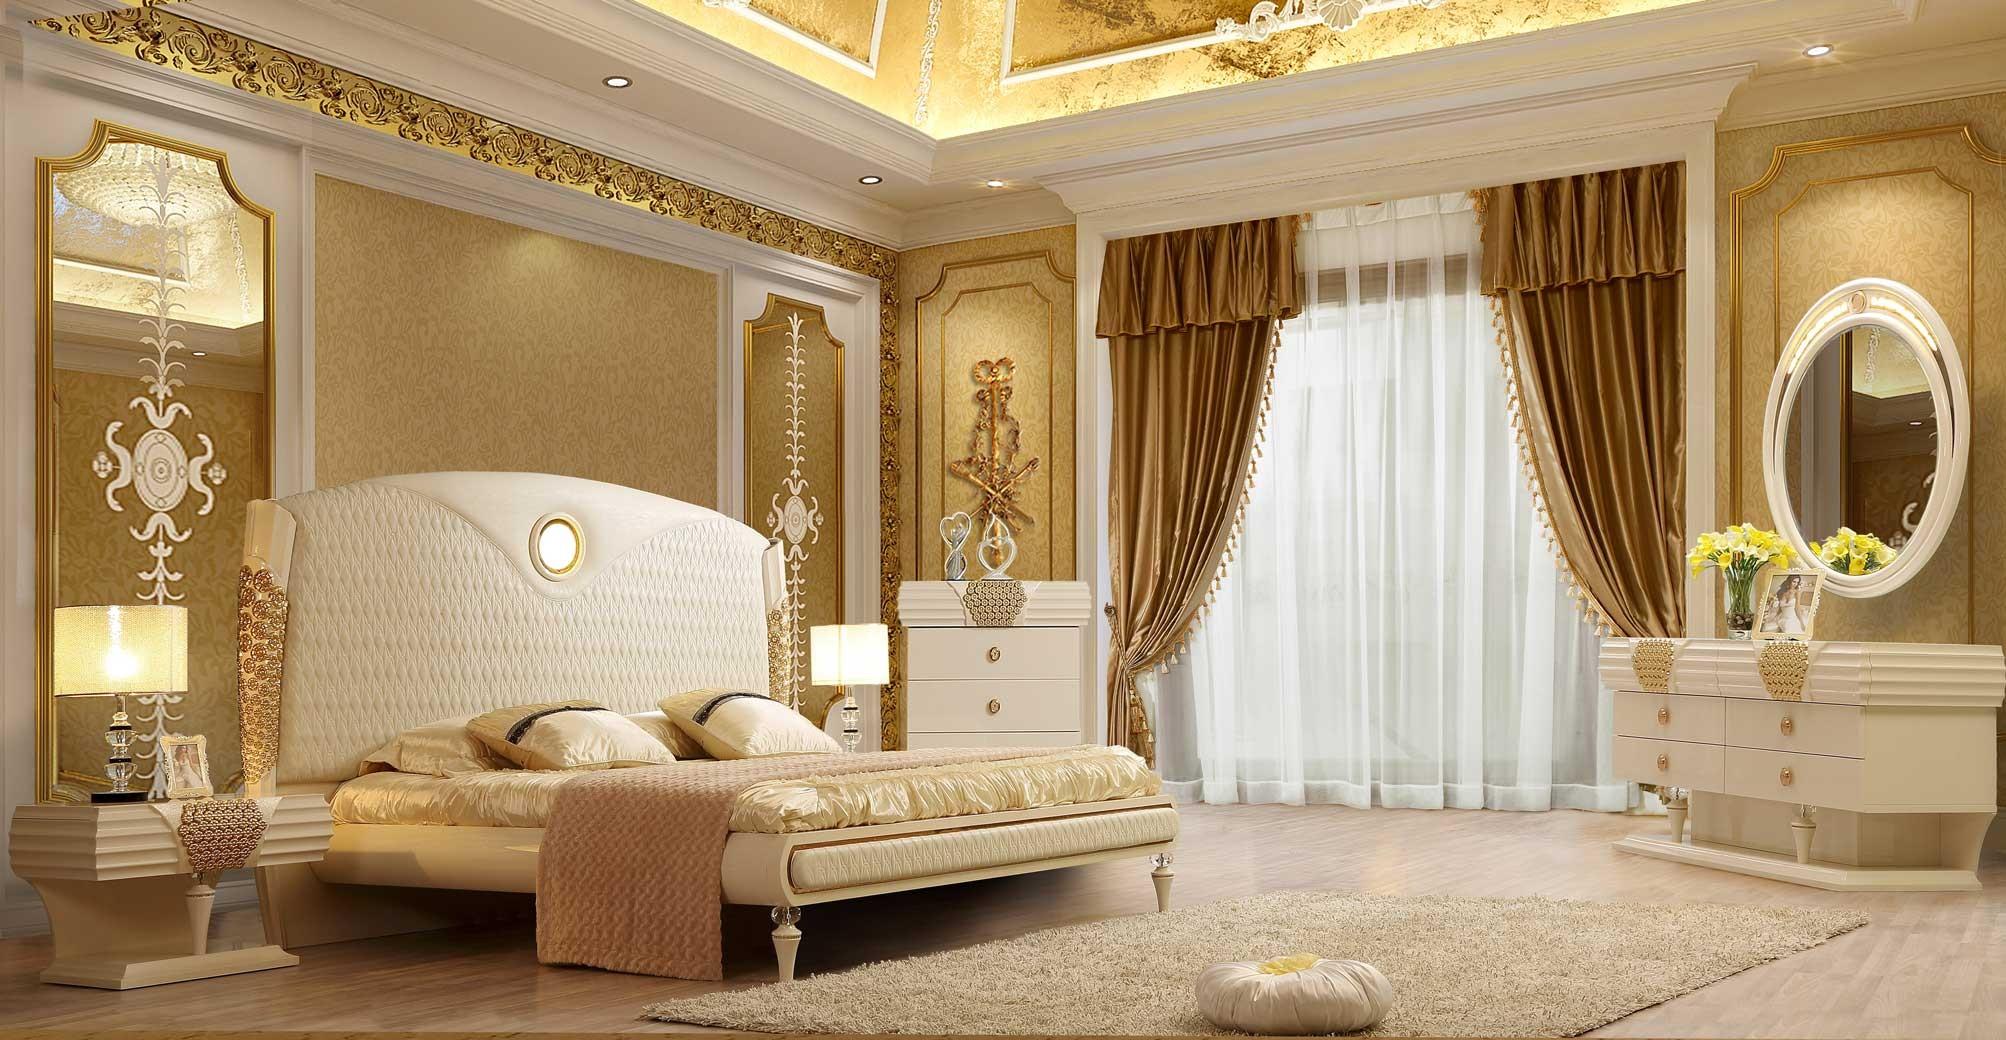 

    
Luxury King Bedroom Set 6 Pcs Cream Leather Contemporary Homey Design HD-901
